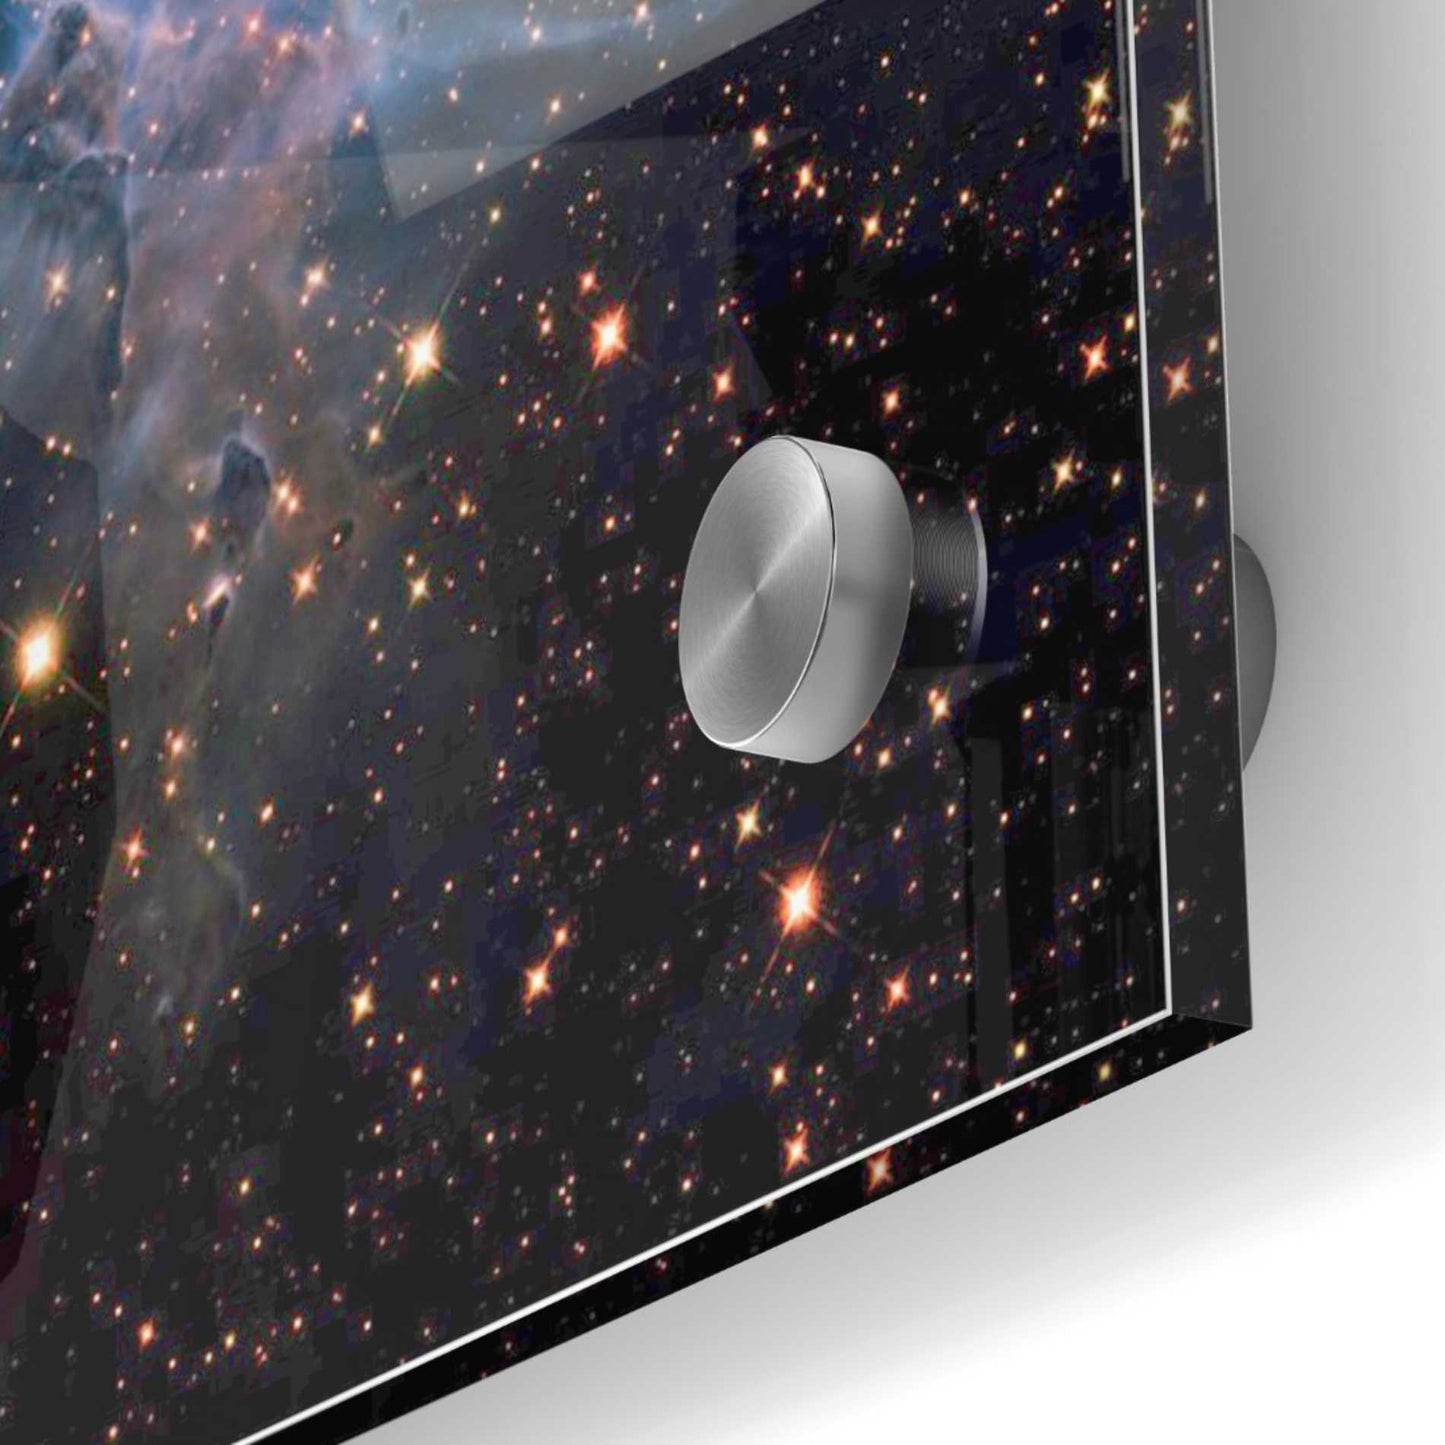 Epic Art "Mystic Mountain Infrared" Hubble Space Telescope Acrylic Glass Wall Art,24x24